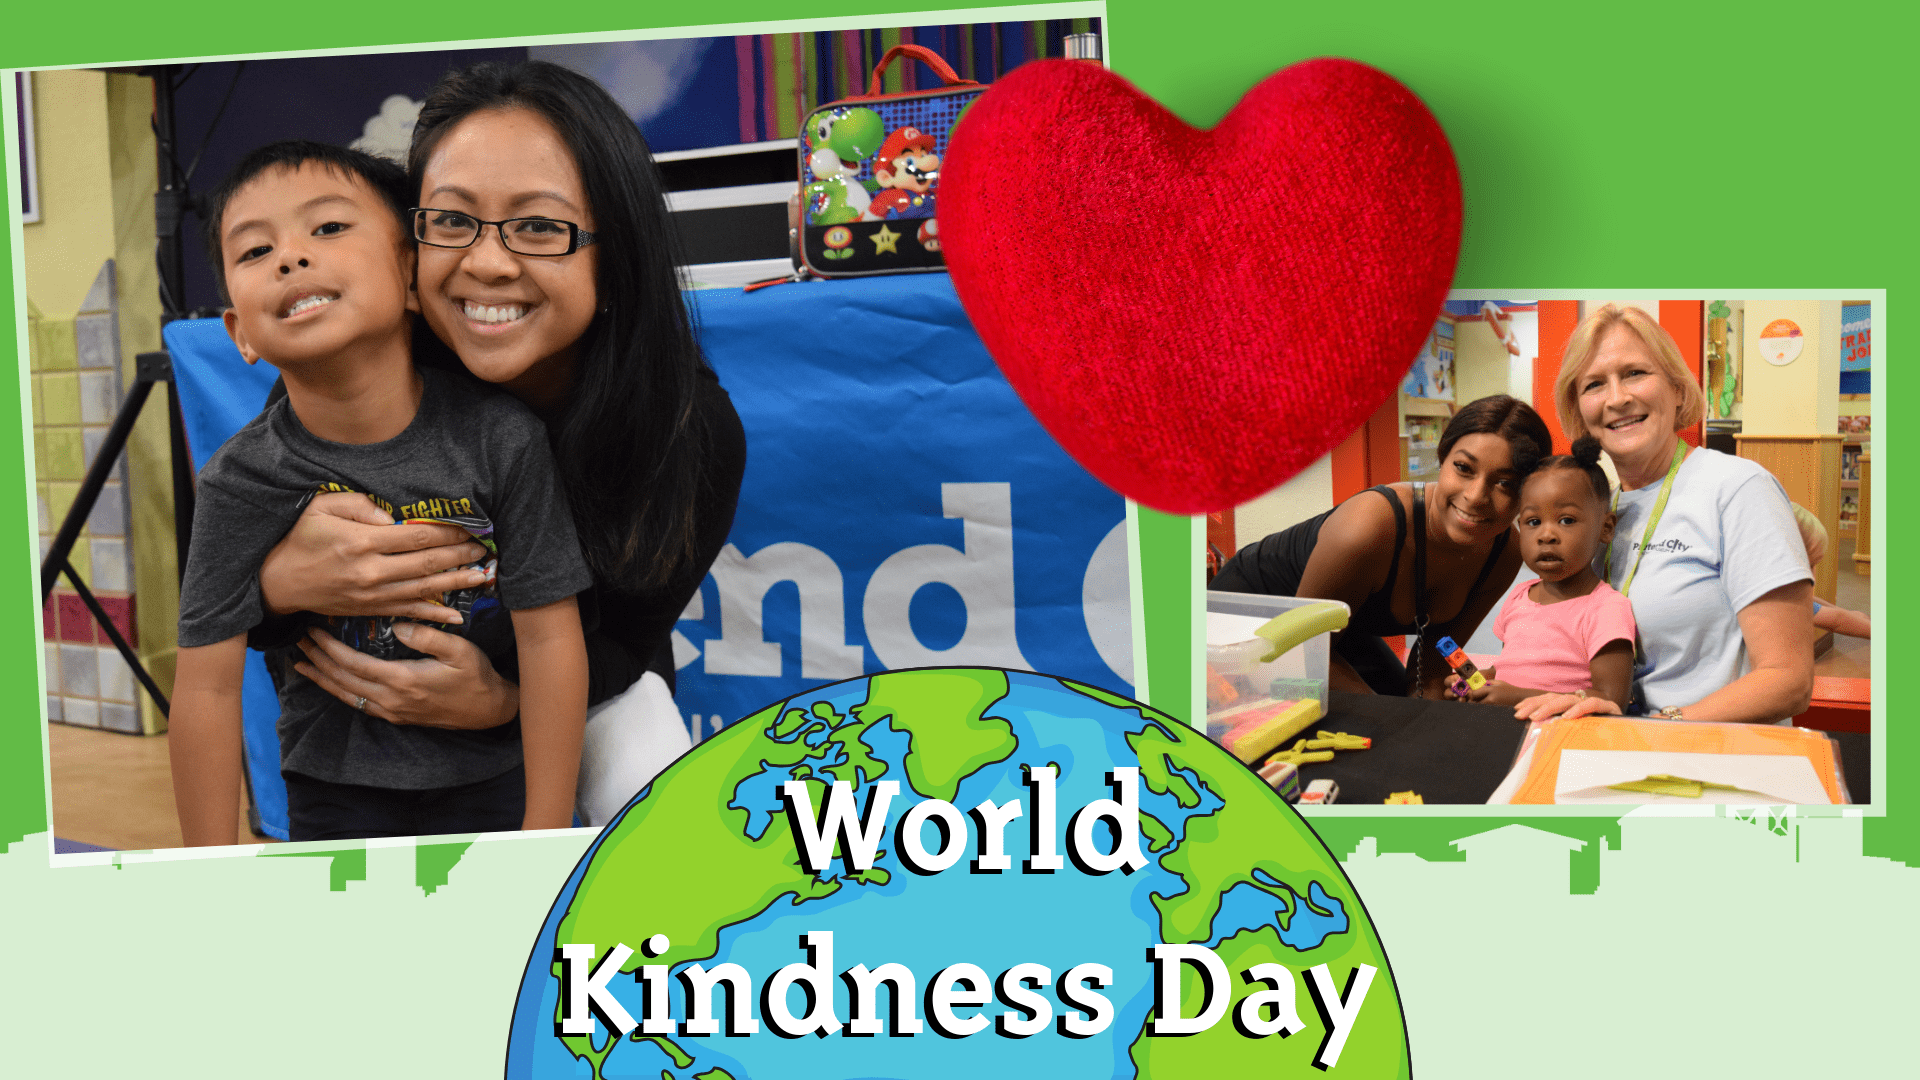 Celebrate World Kindness Day presented